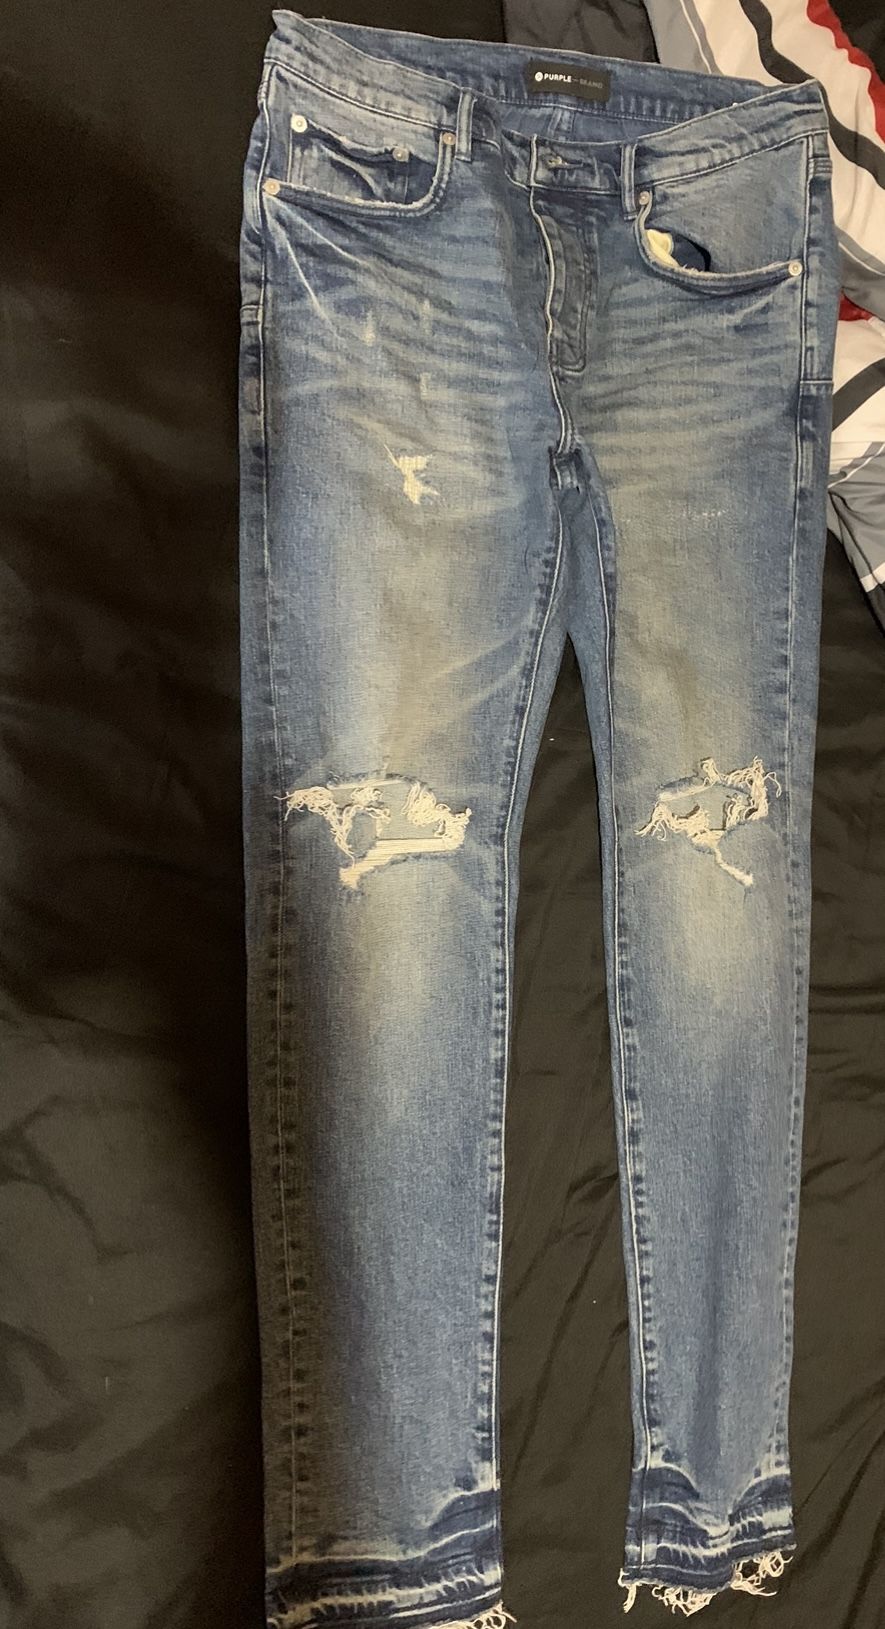 Size 33 purple jeans No Trades $80 